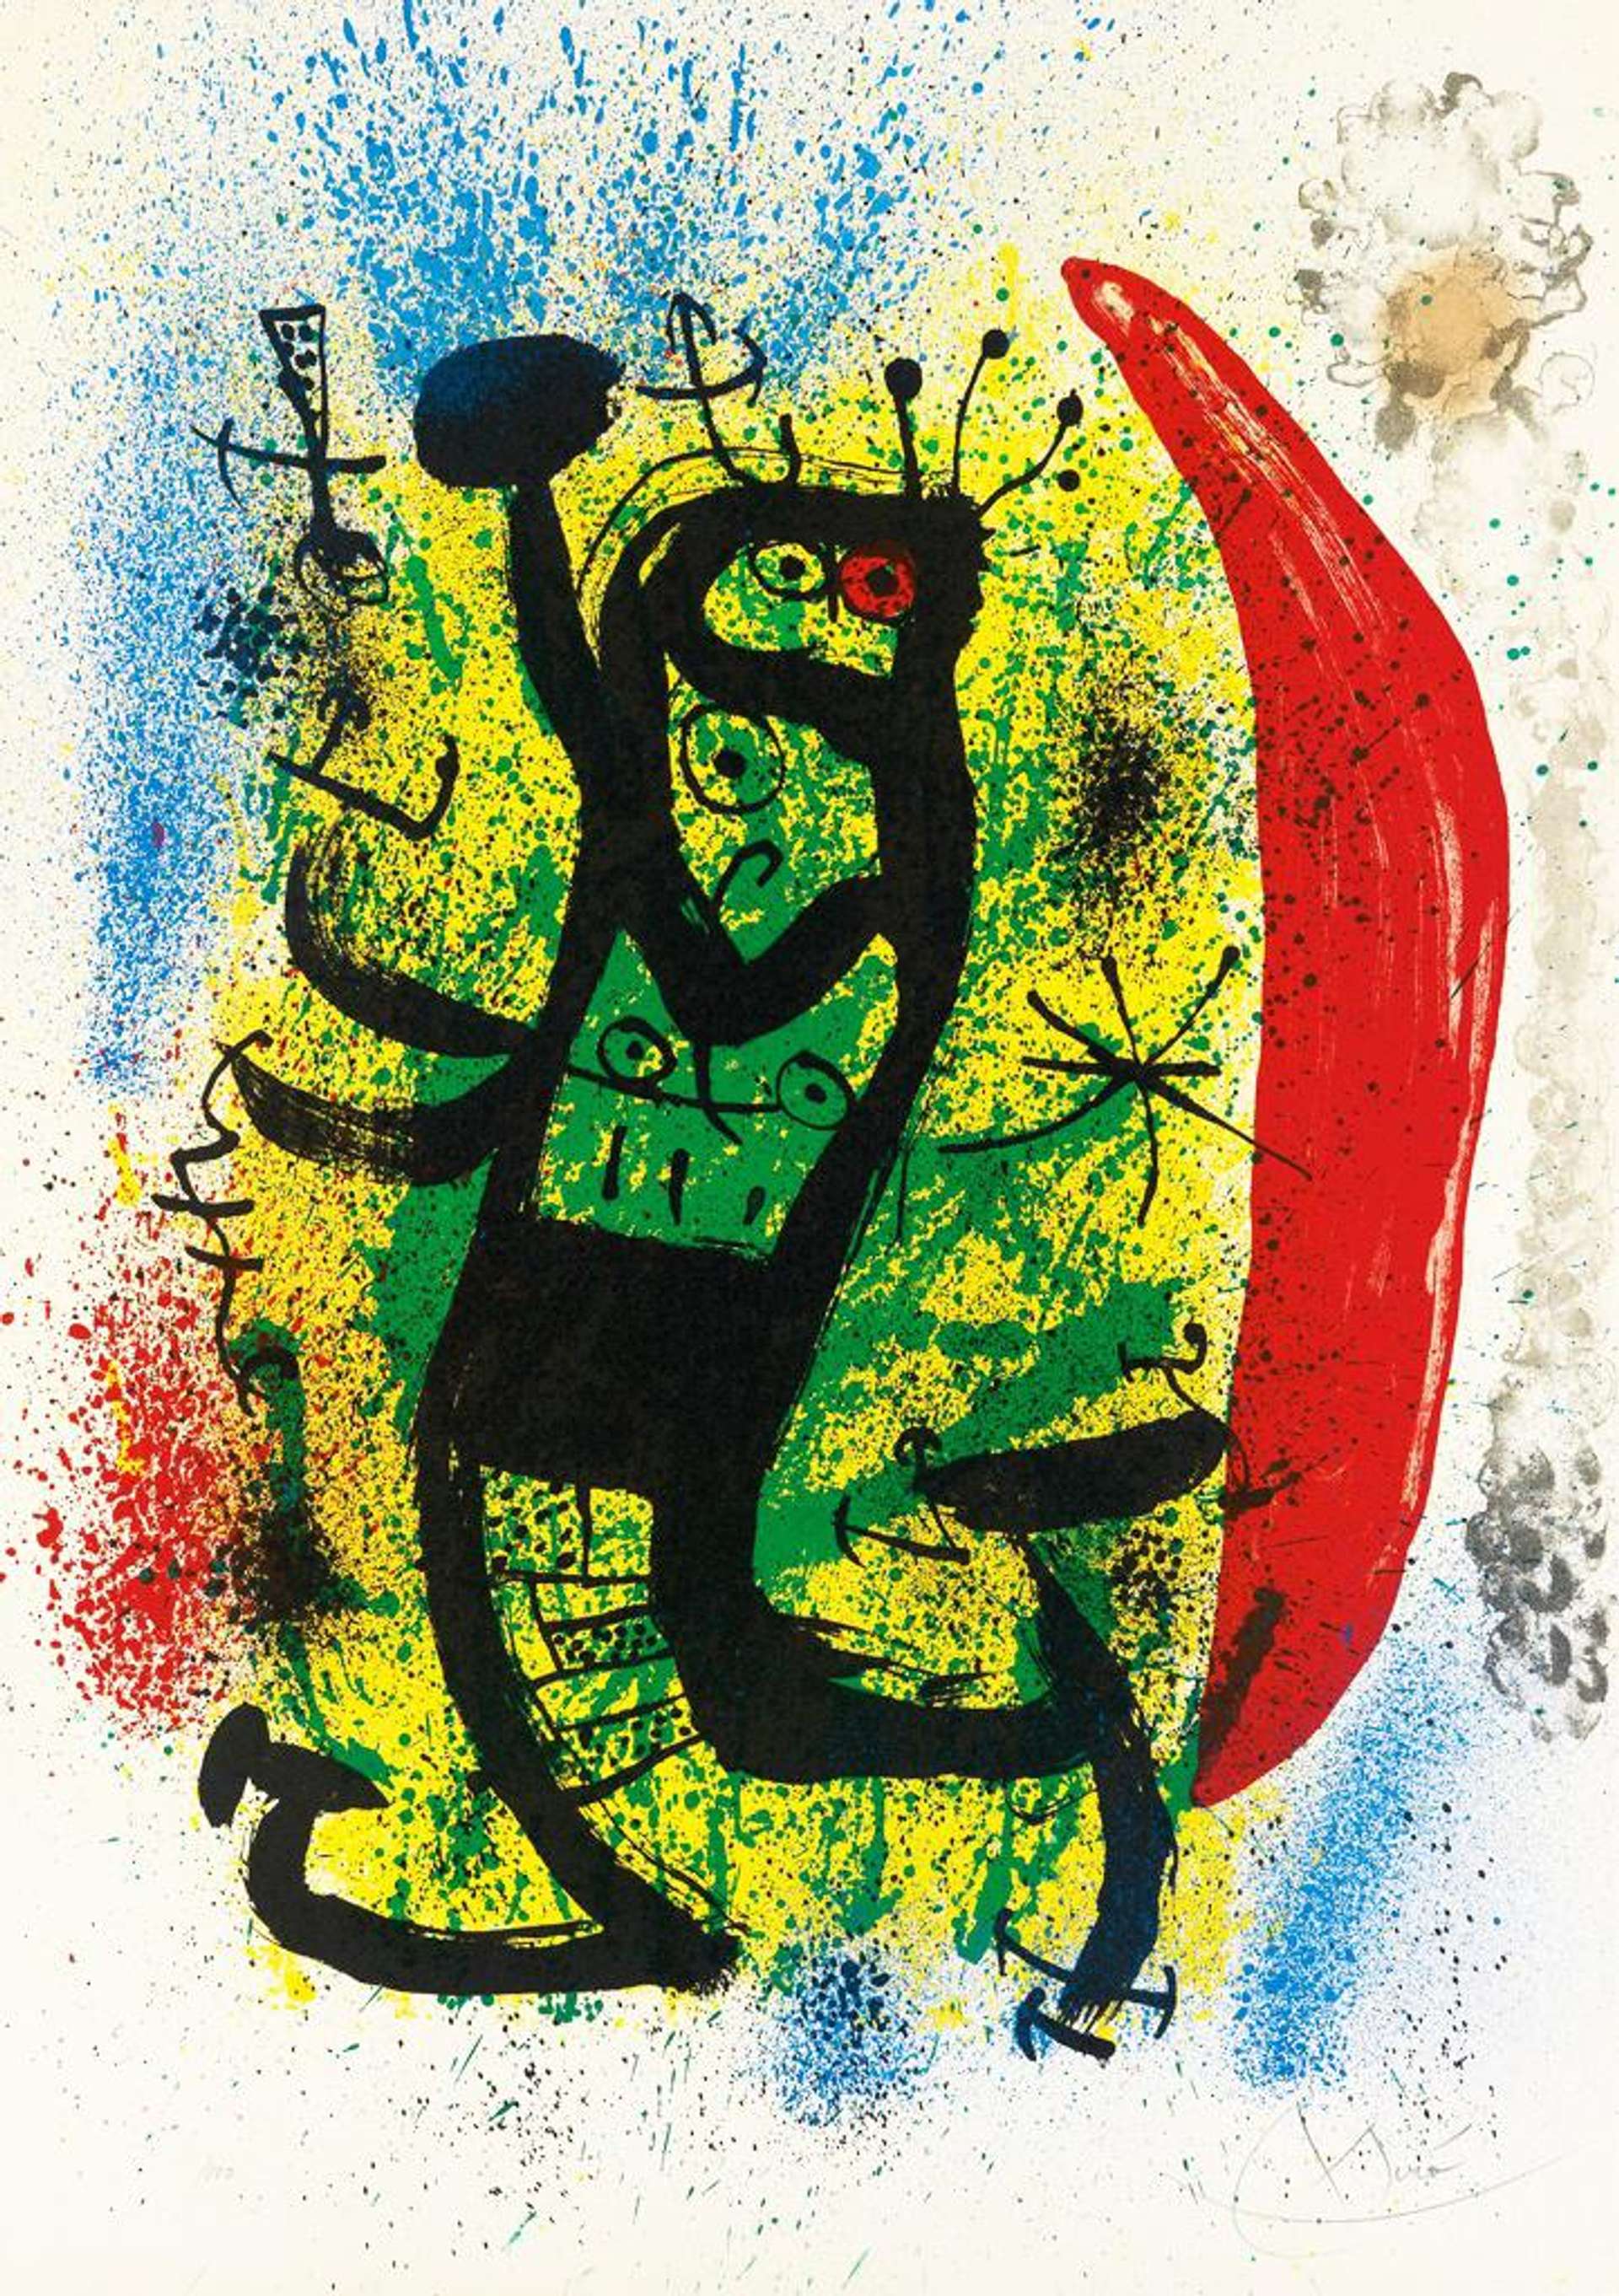 Joan Miró: Le Homard - Signed Print